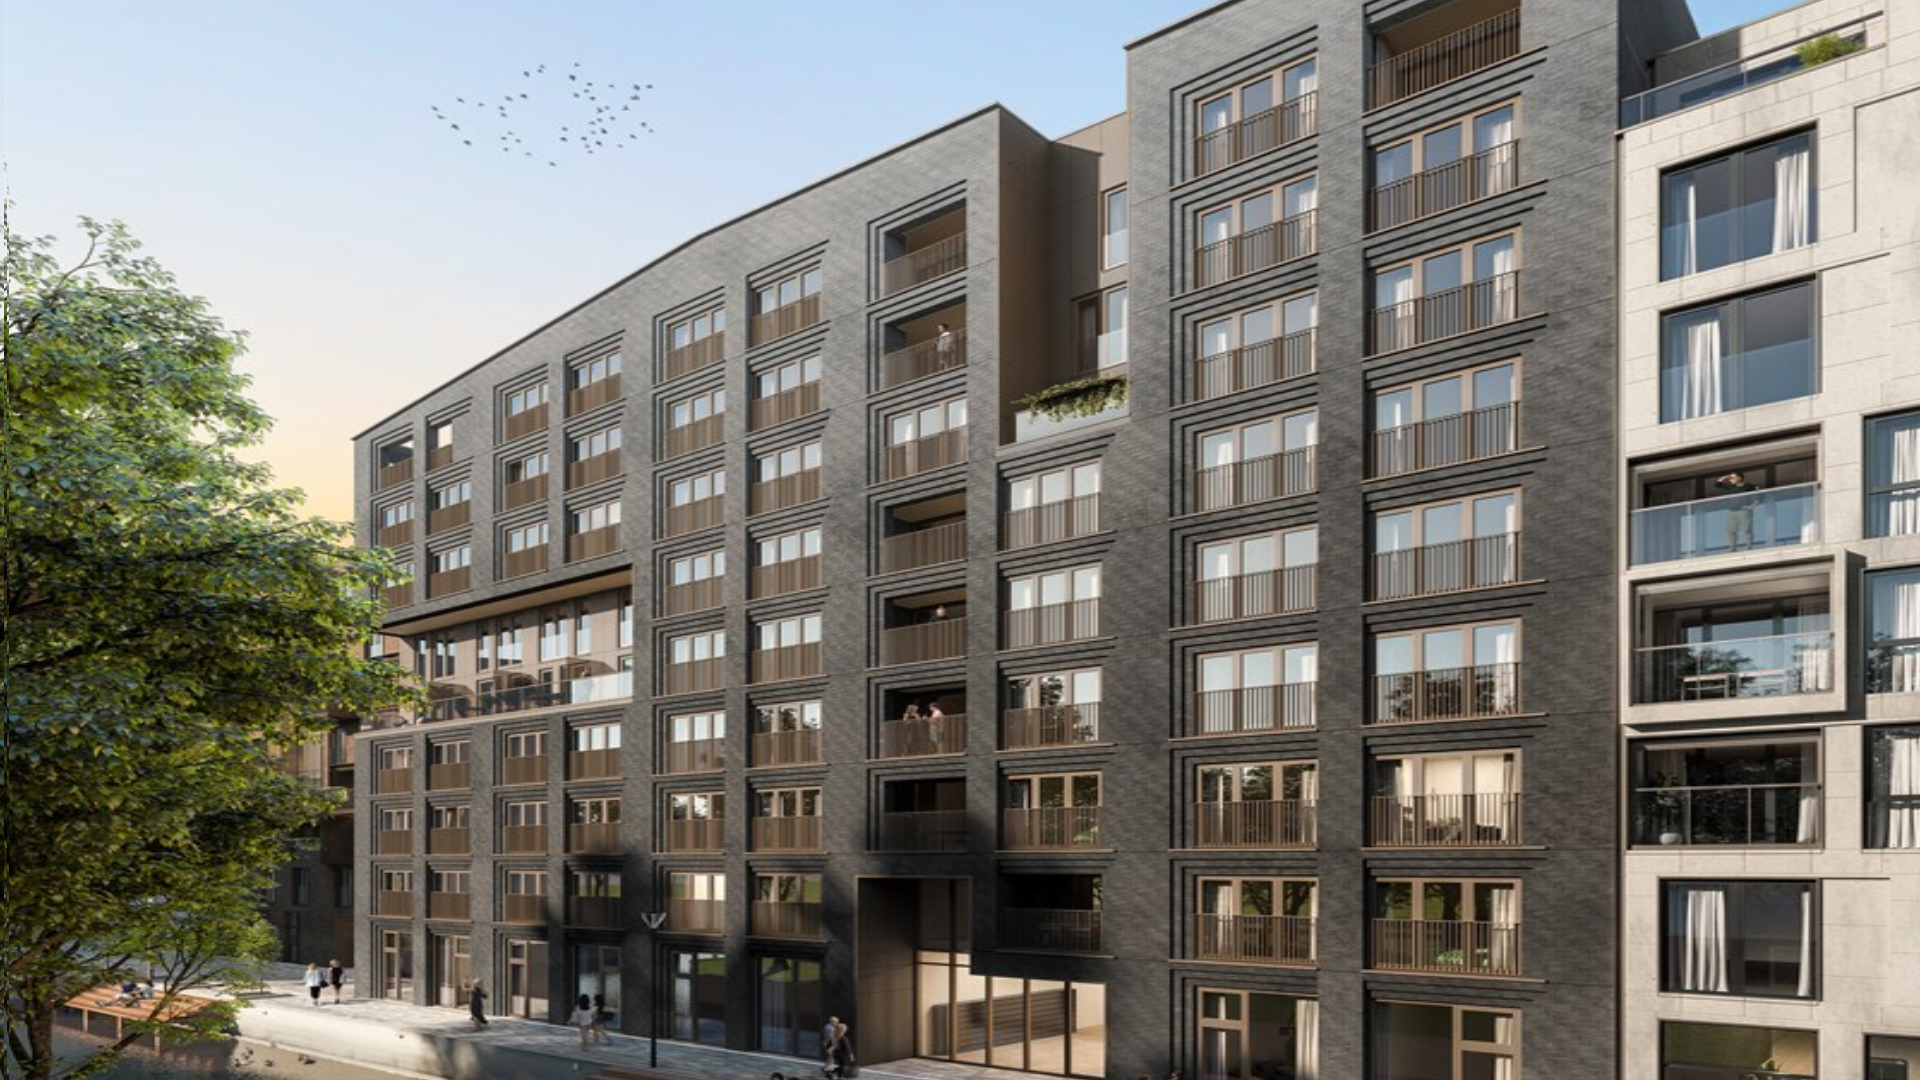 Je bekijkt nu 406 appartementen Hyde park (Knightsbridge) 2023-2026